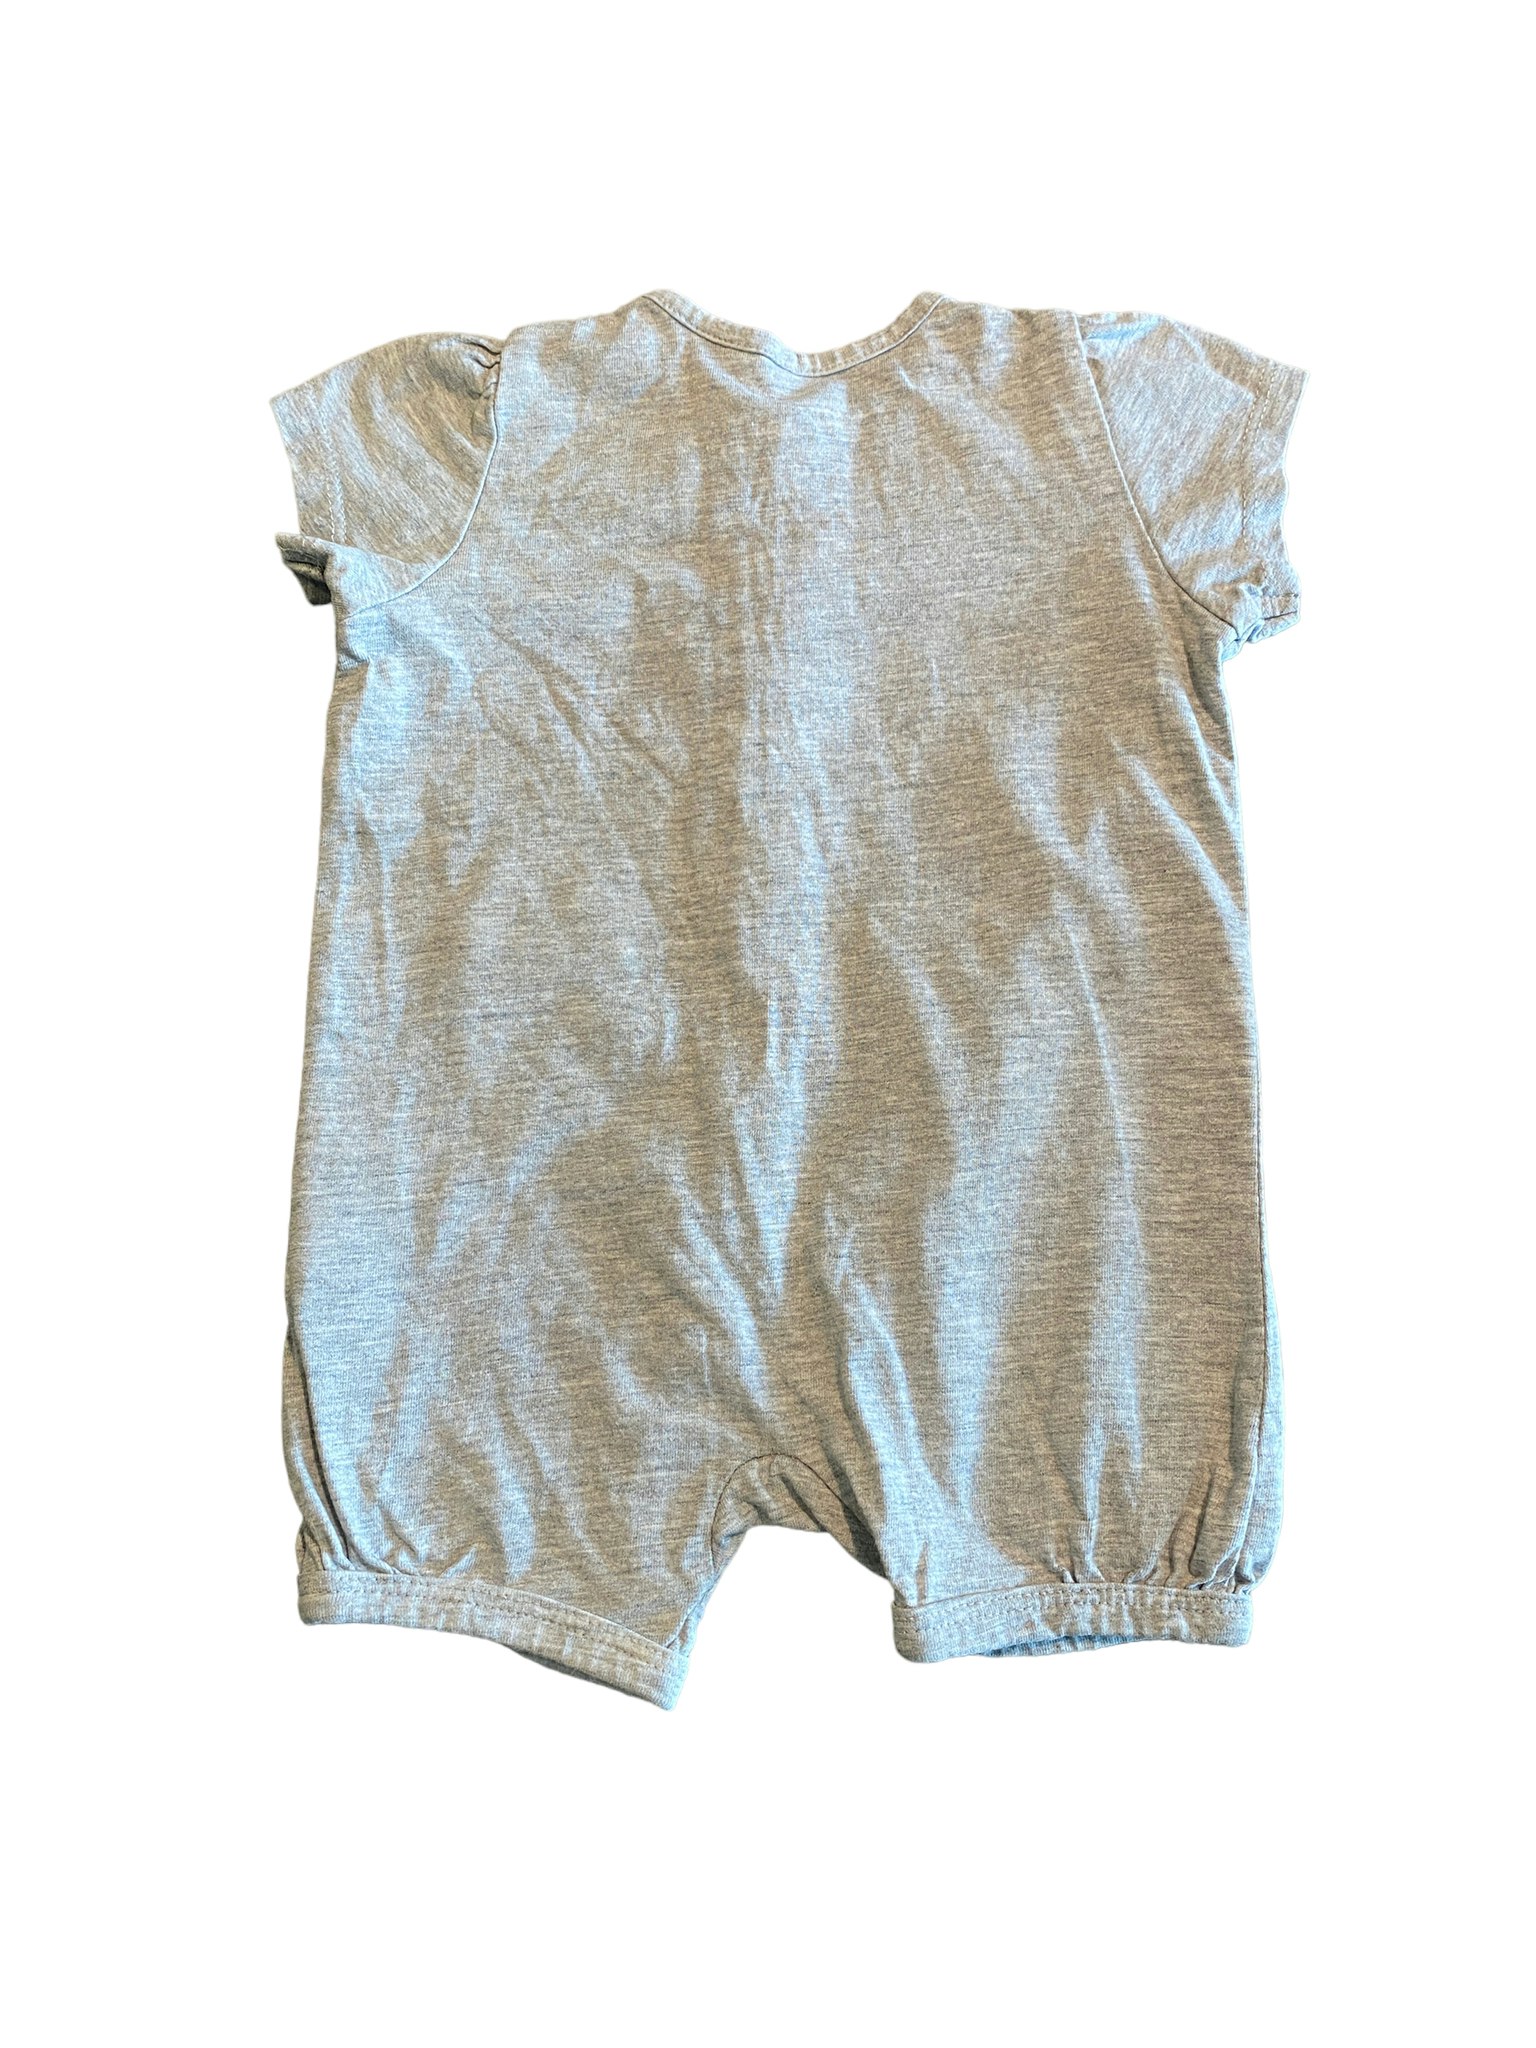 Kortärmad pyjamas/jumpsuit, HM, stl 56